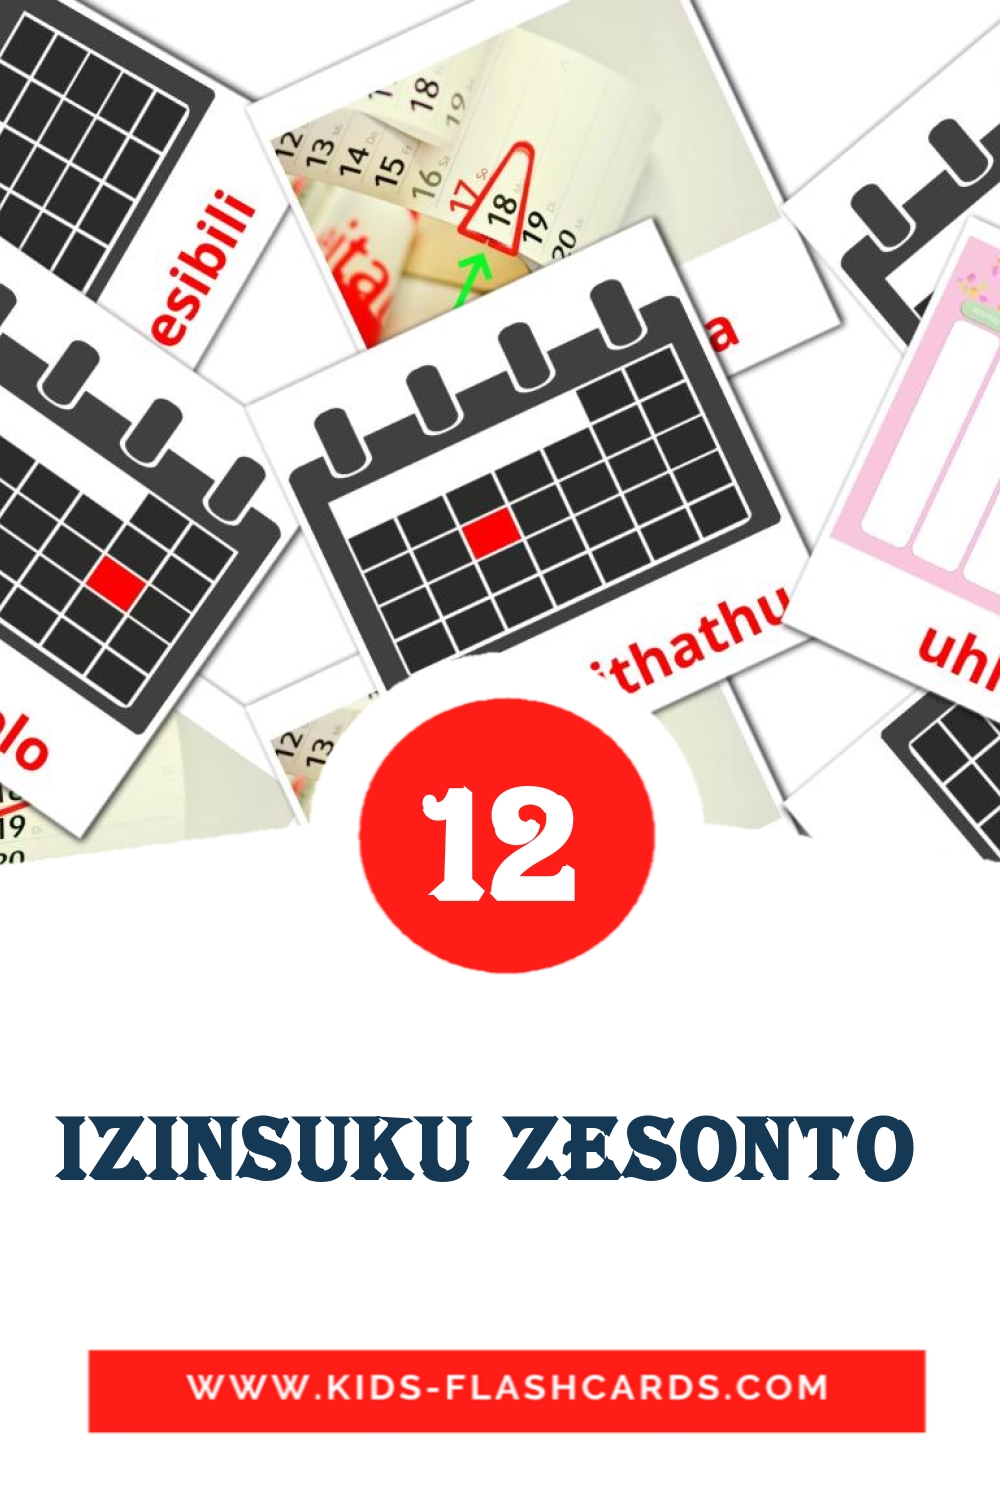 Izinsuku zesonto  на зулу для Детского Сада (12 карточек)